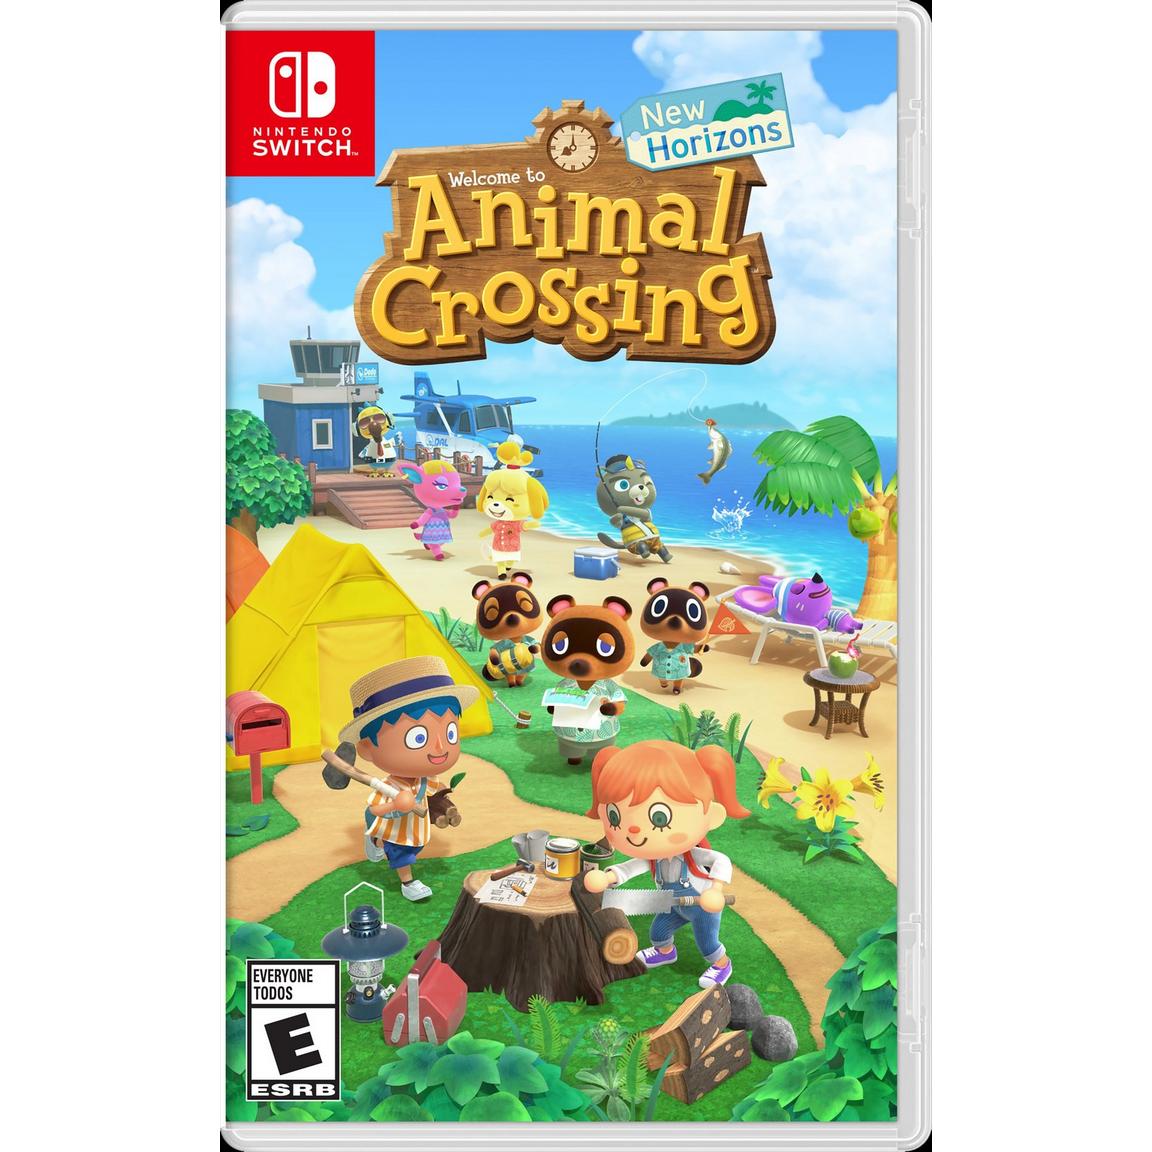 Видеоигра Animal Crossing: New Horizons - Nintendo Switch 2020 animal crossing plush toy new horizons game animal crossing amiibo marshal plush toy free give away 1pcs amiibo card